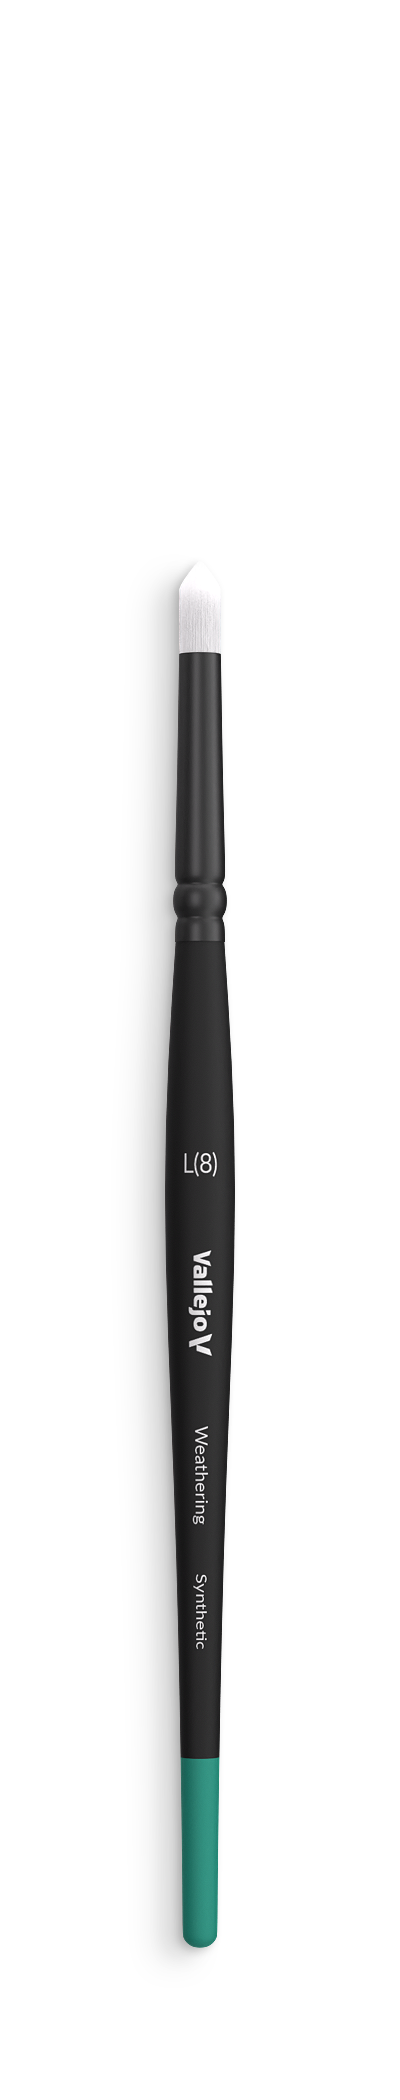 B08003 Vallejo Weathering Brushes - Round Synthetic Brush (Large)